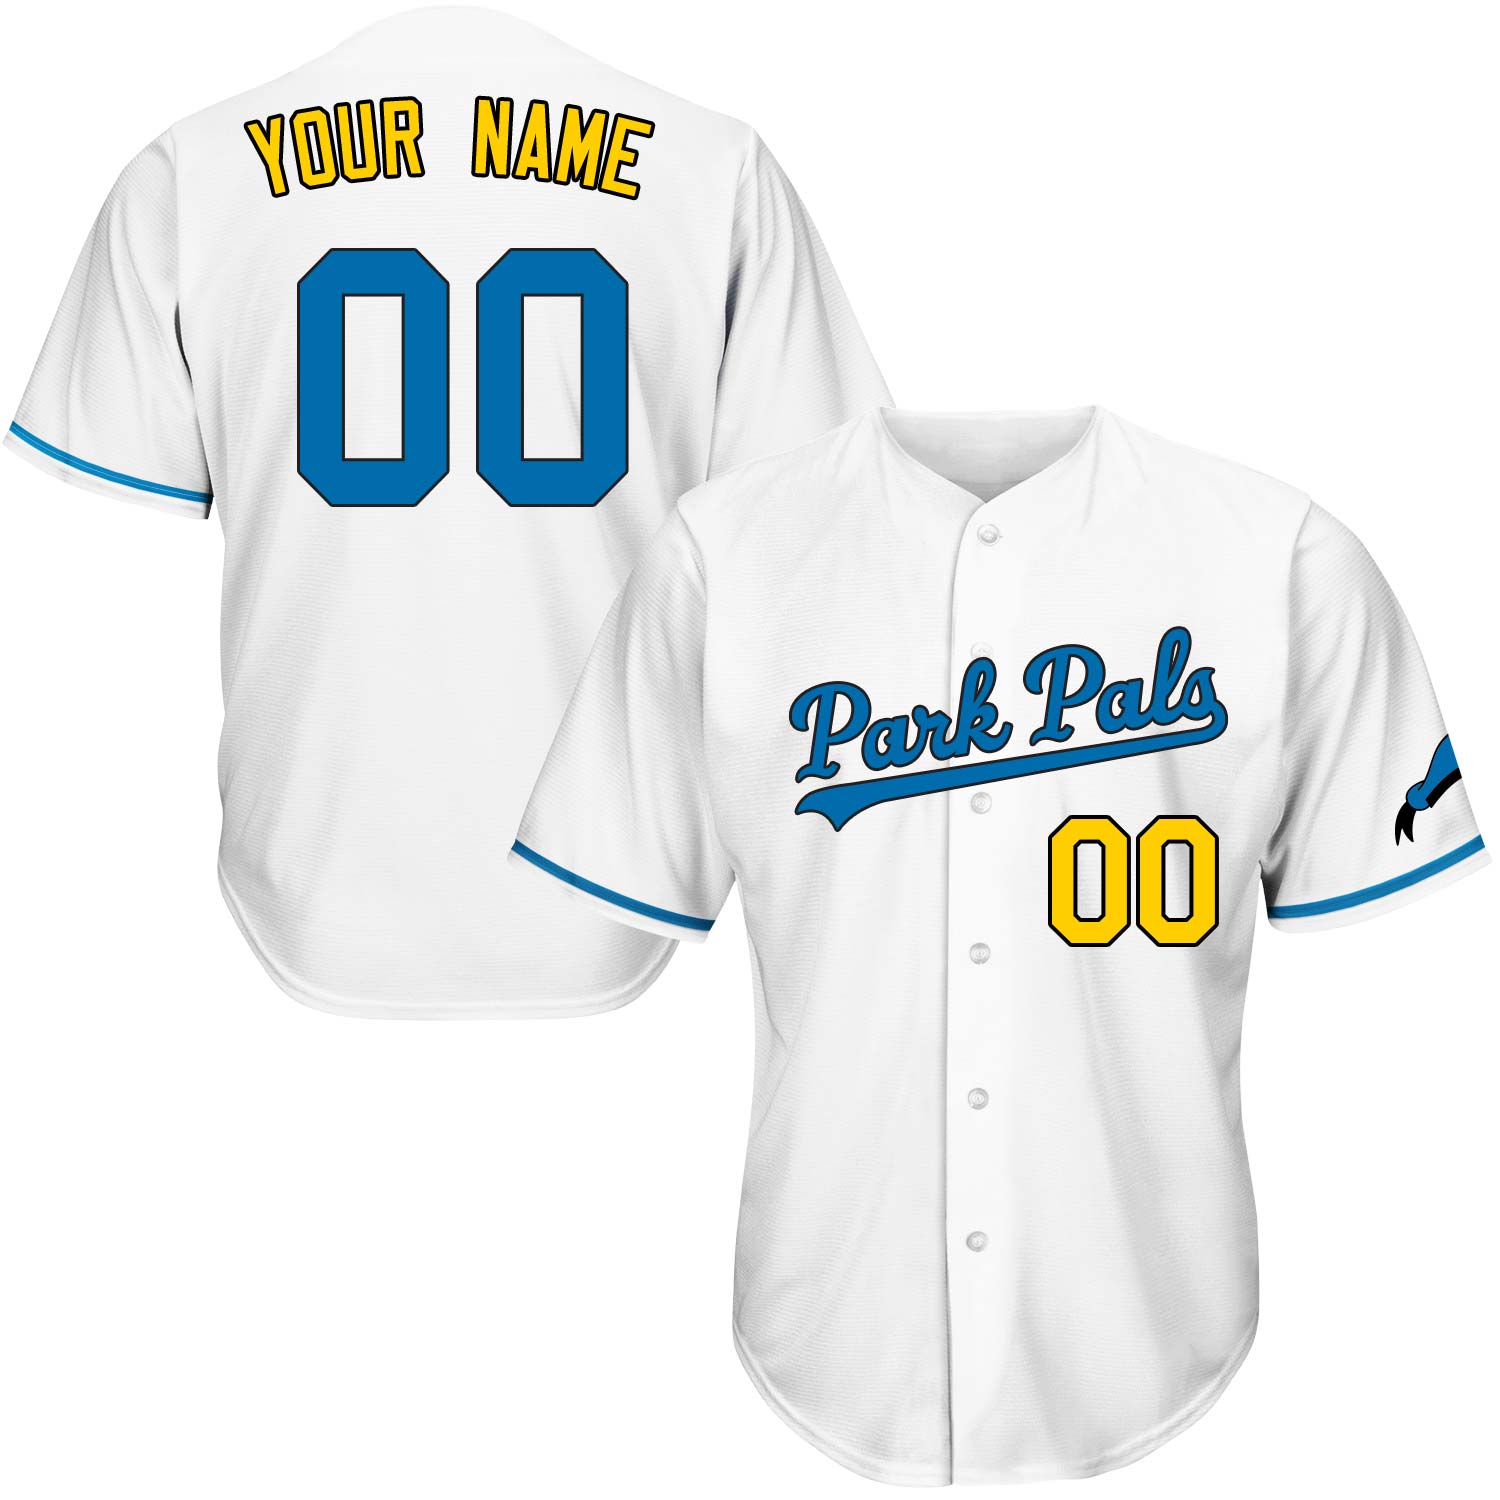 light blue and white baseball jersey